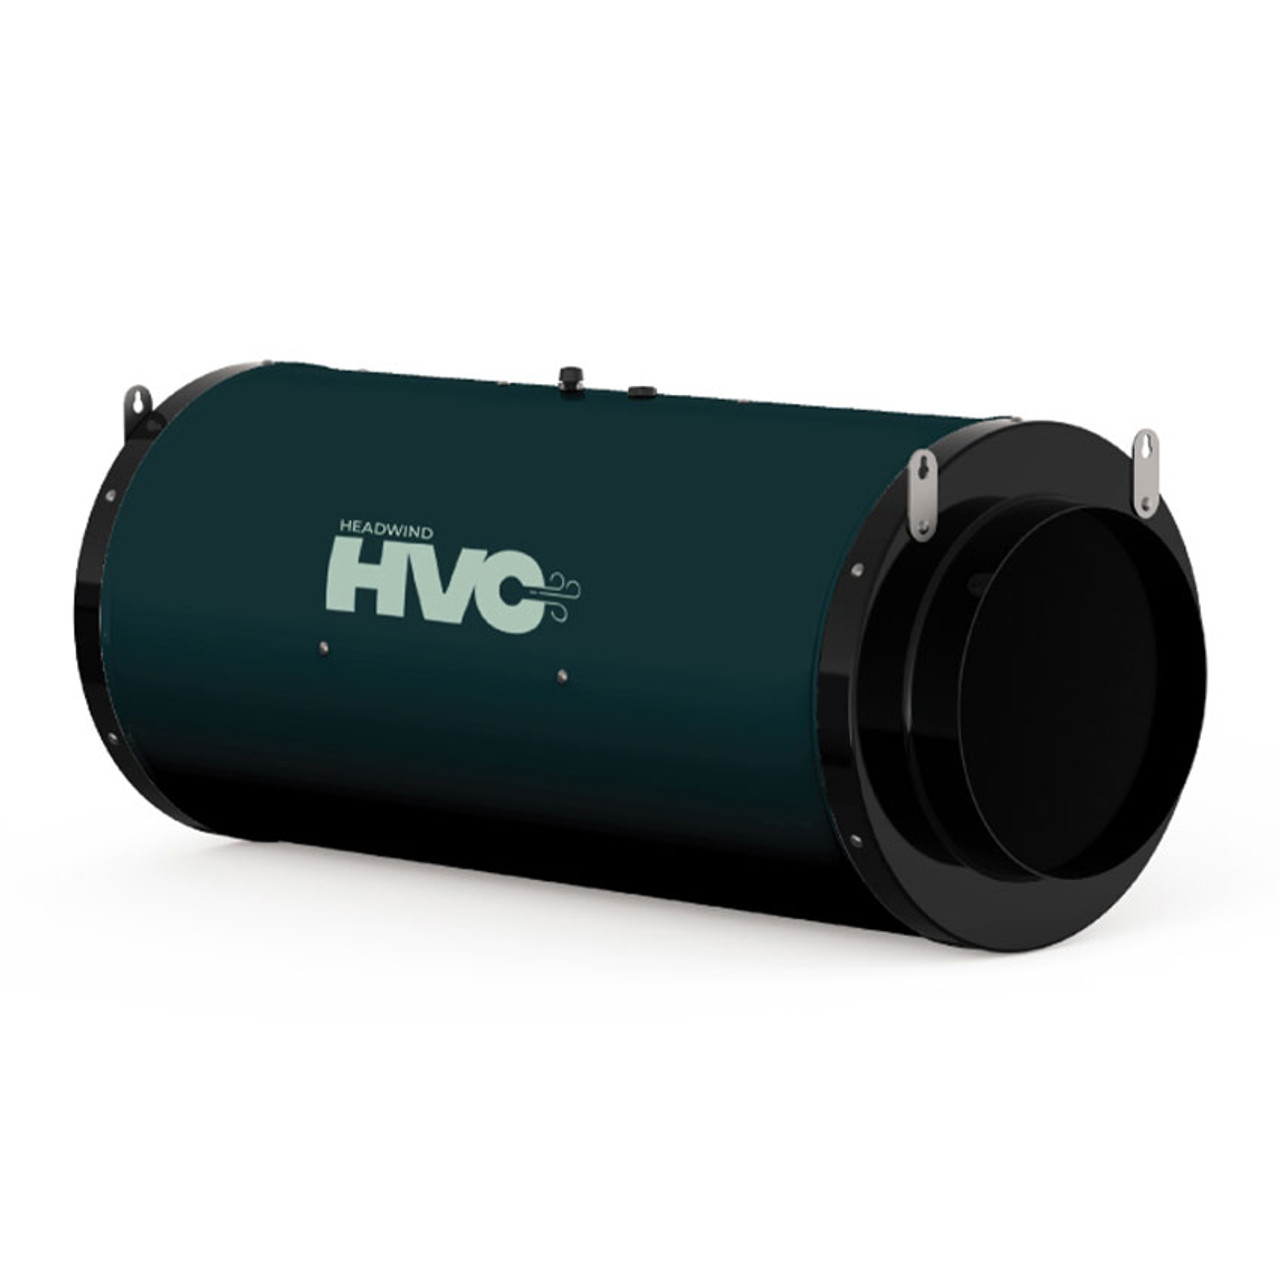 HVC EC FAN SILENCED MIXED FLOW 200MM (1205 M3/H)